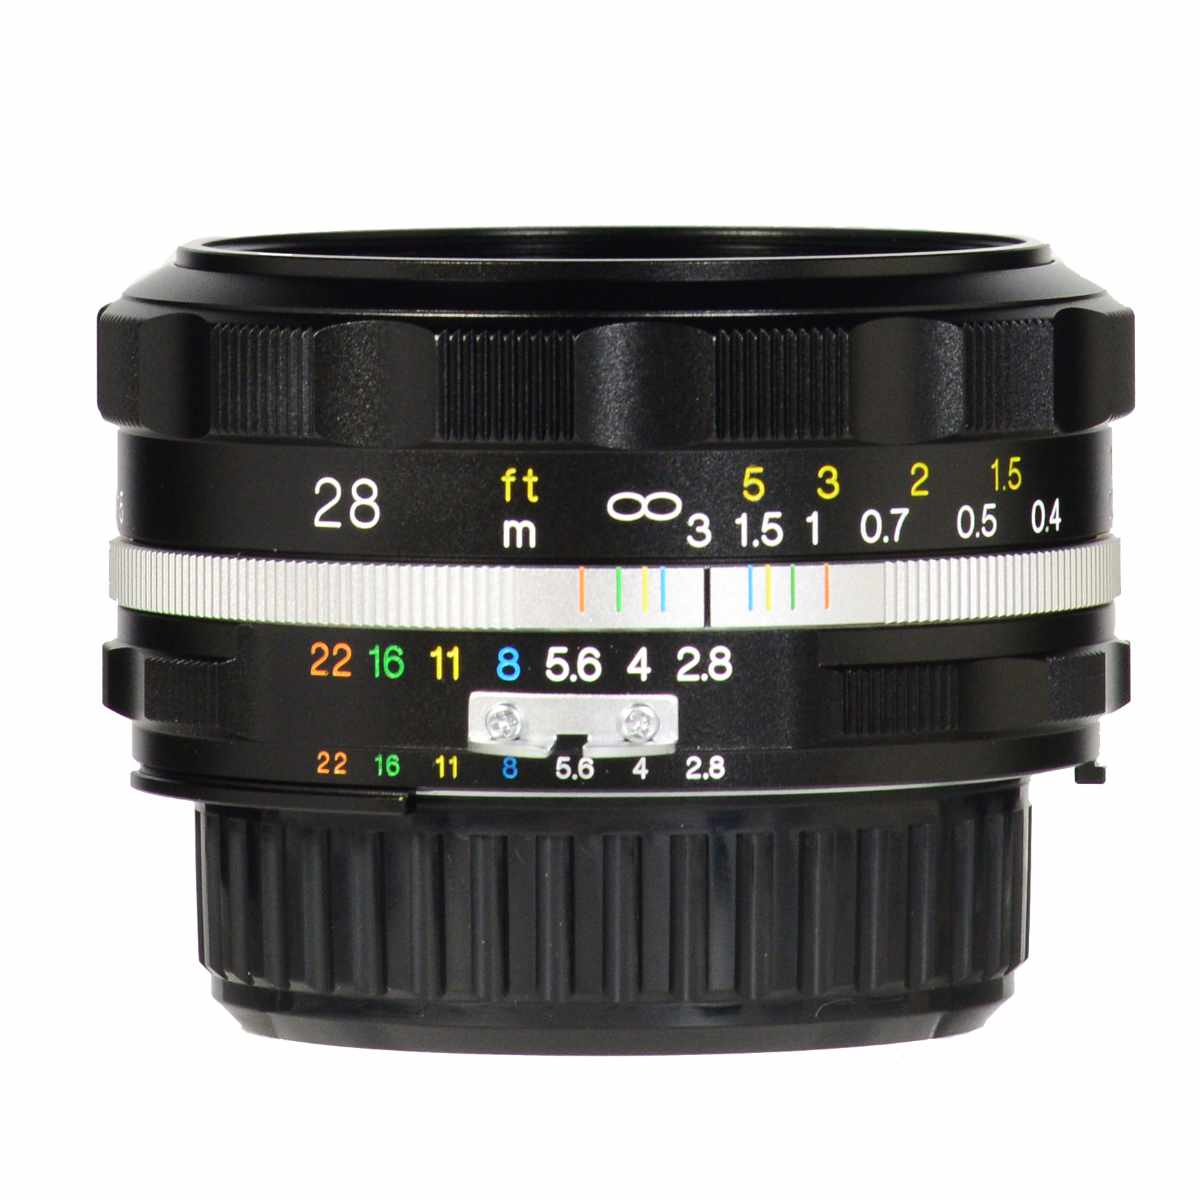 Voigtlaender Color-Skopar 28mm f/2.8 SL-II S AIS Black Nikon F